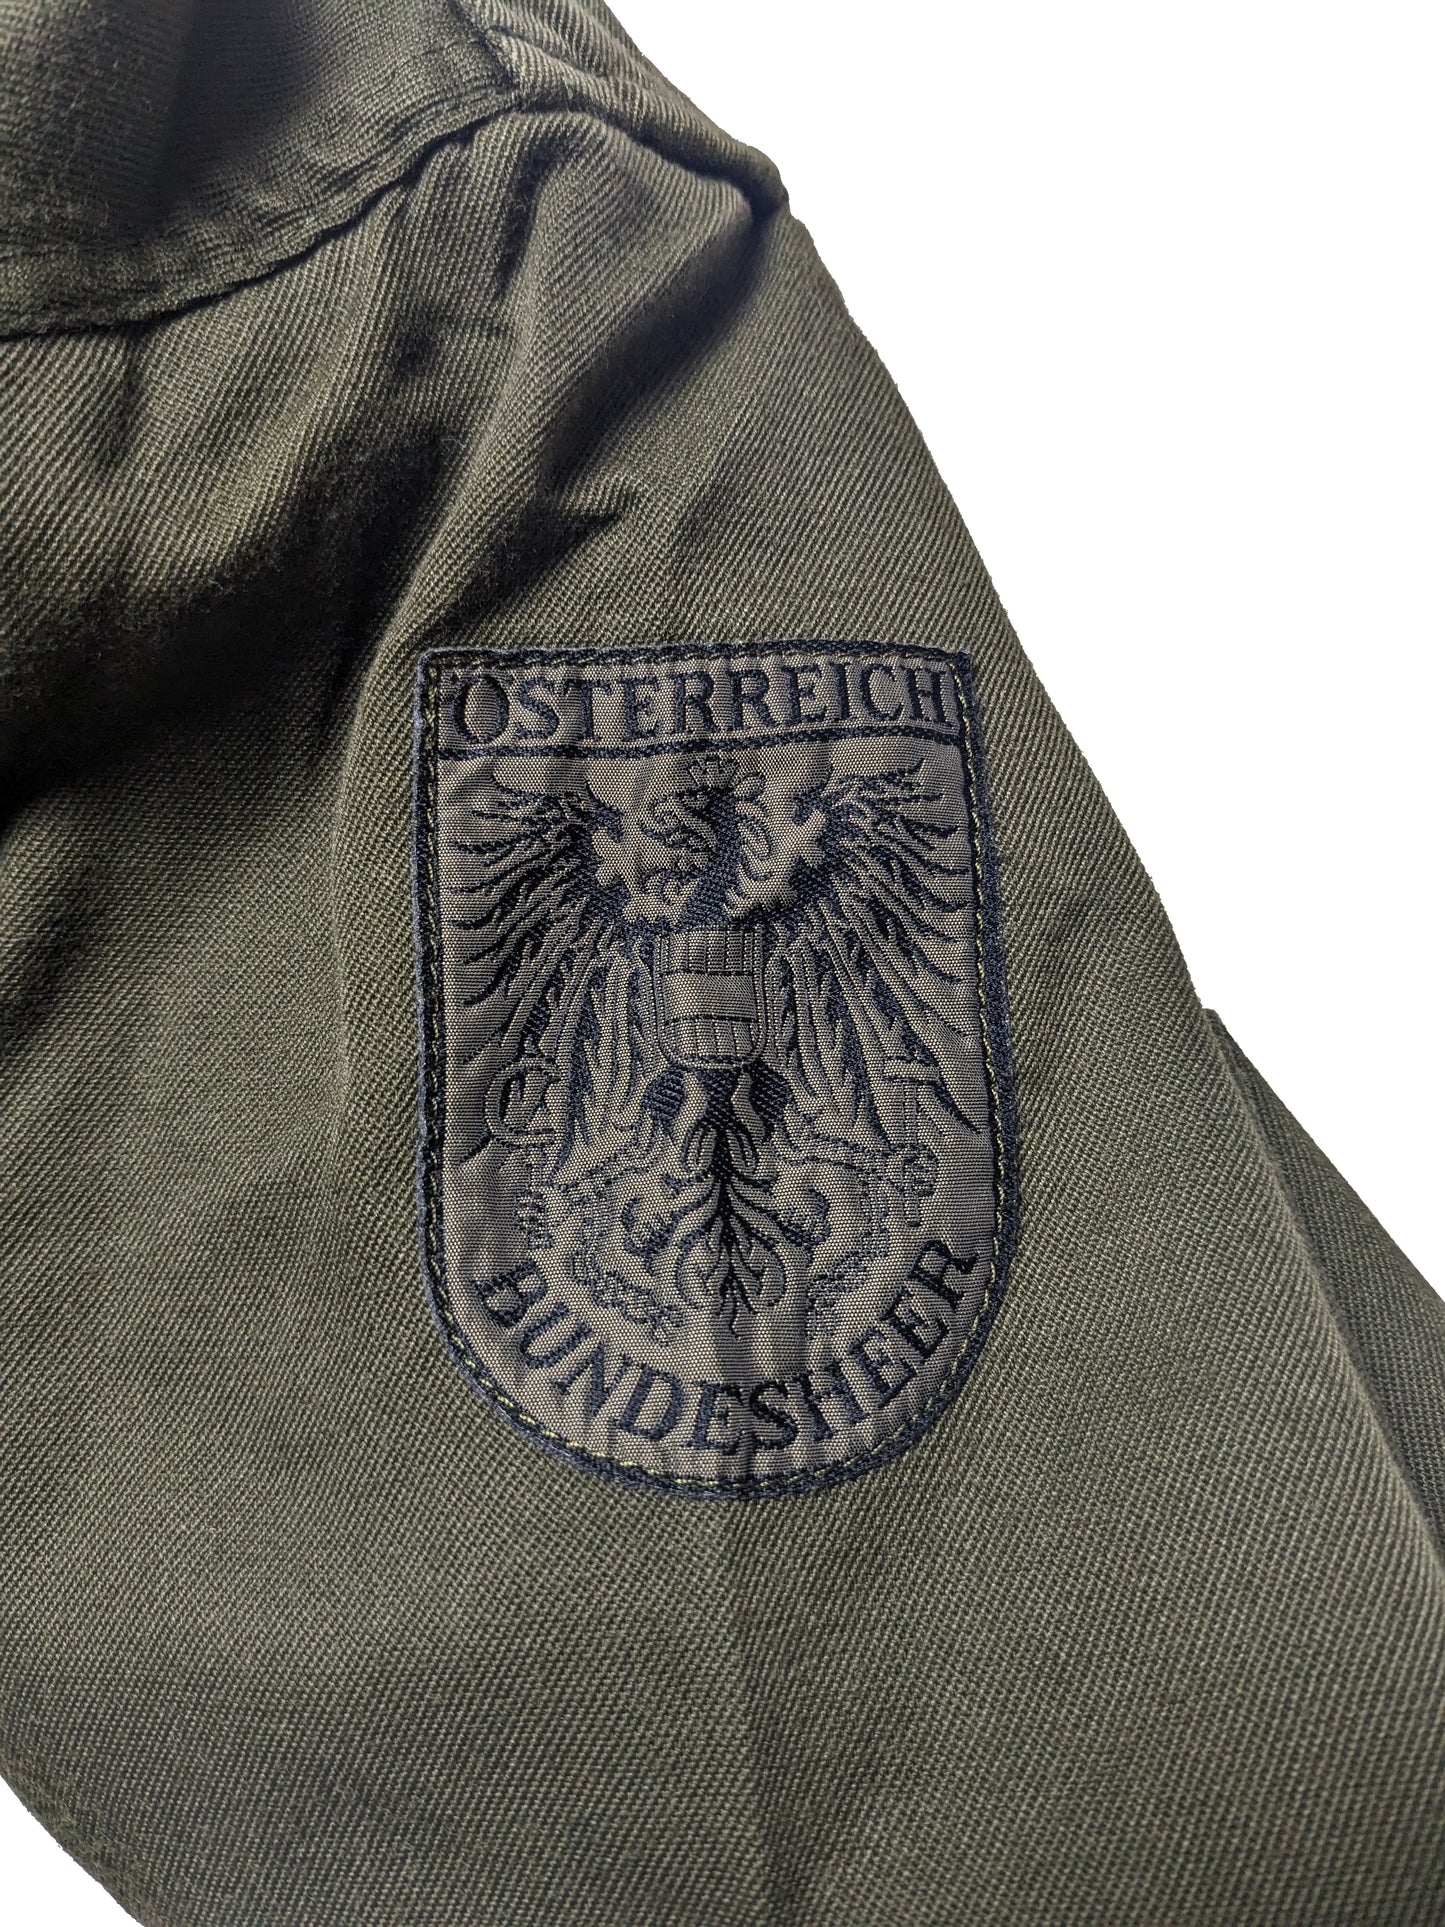 Austrian Army Field Shirt OD Green 2